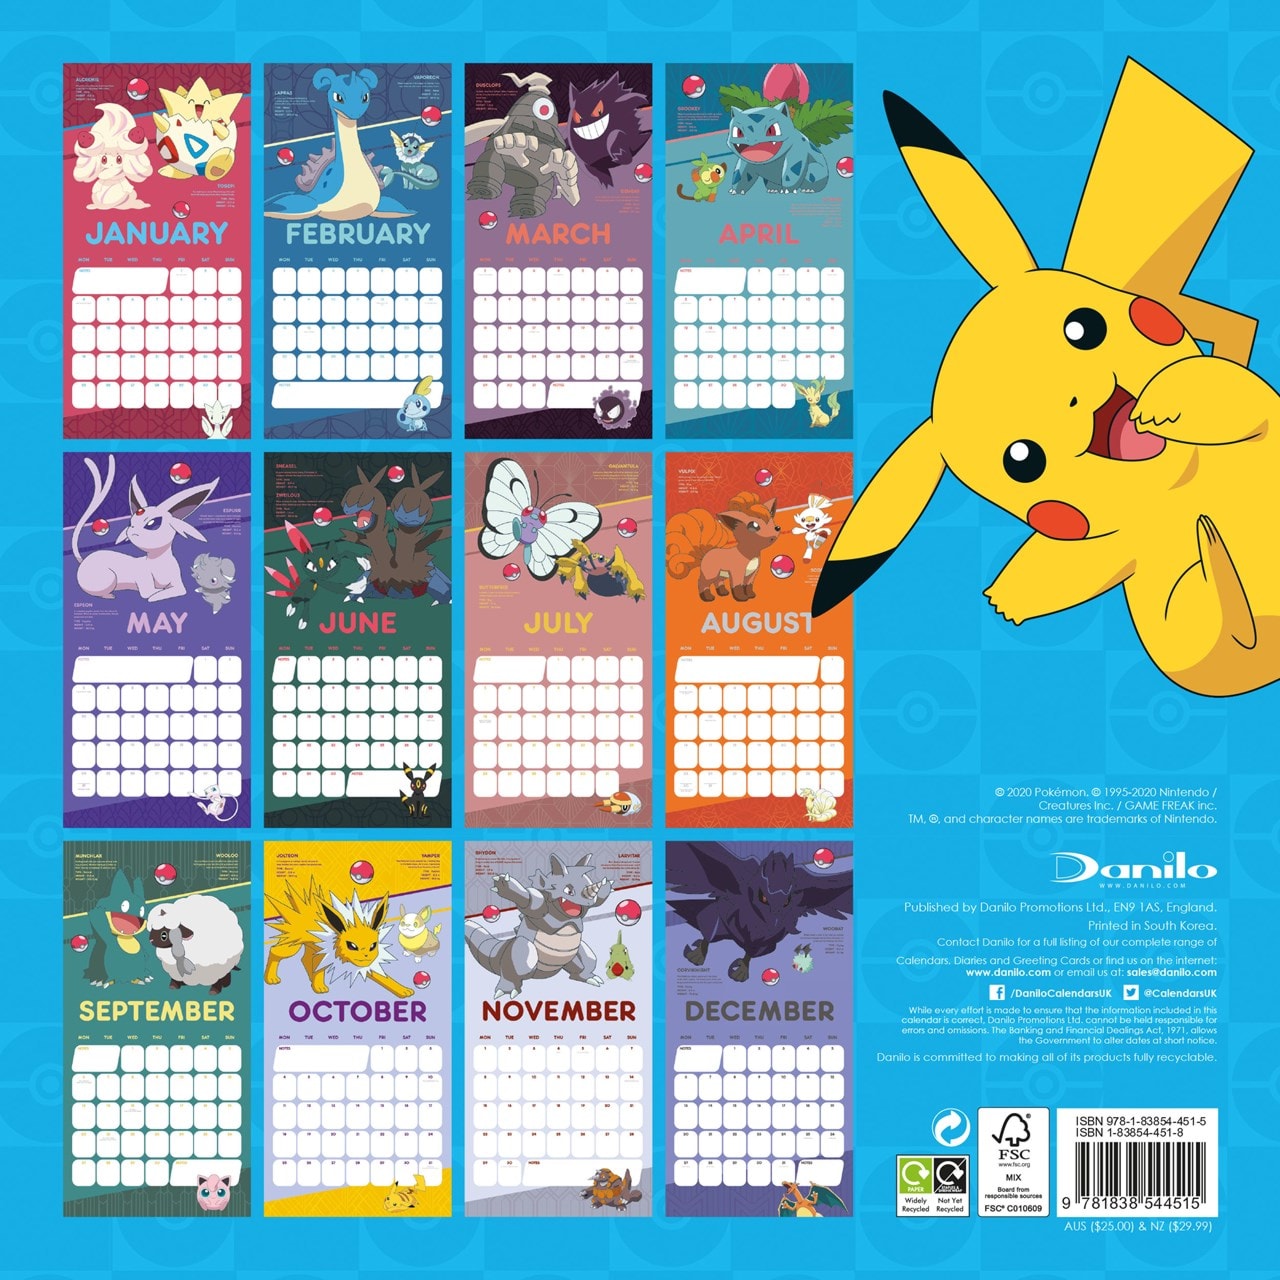 Pokemon Calendar April 2021 Calendar APR 2021